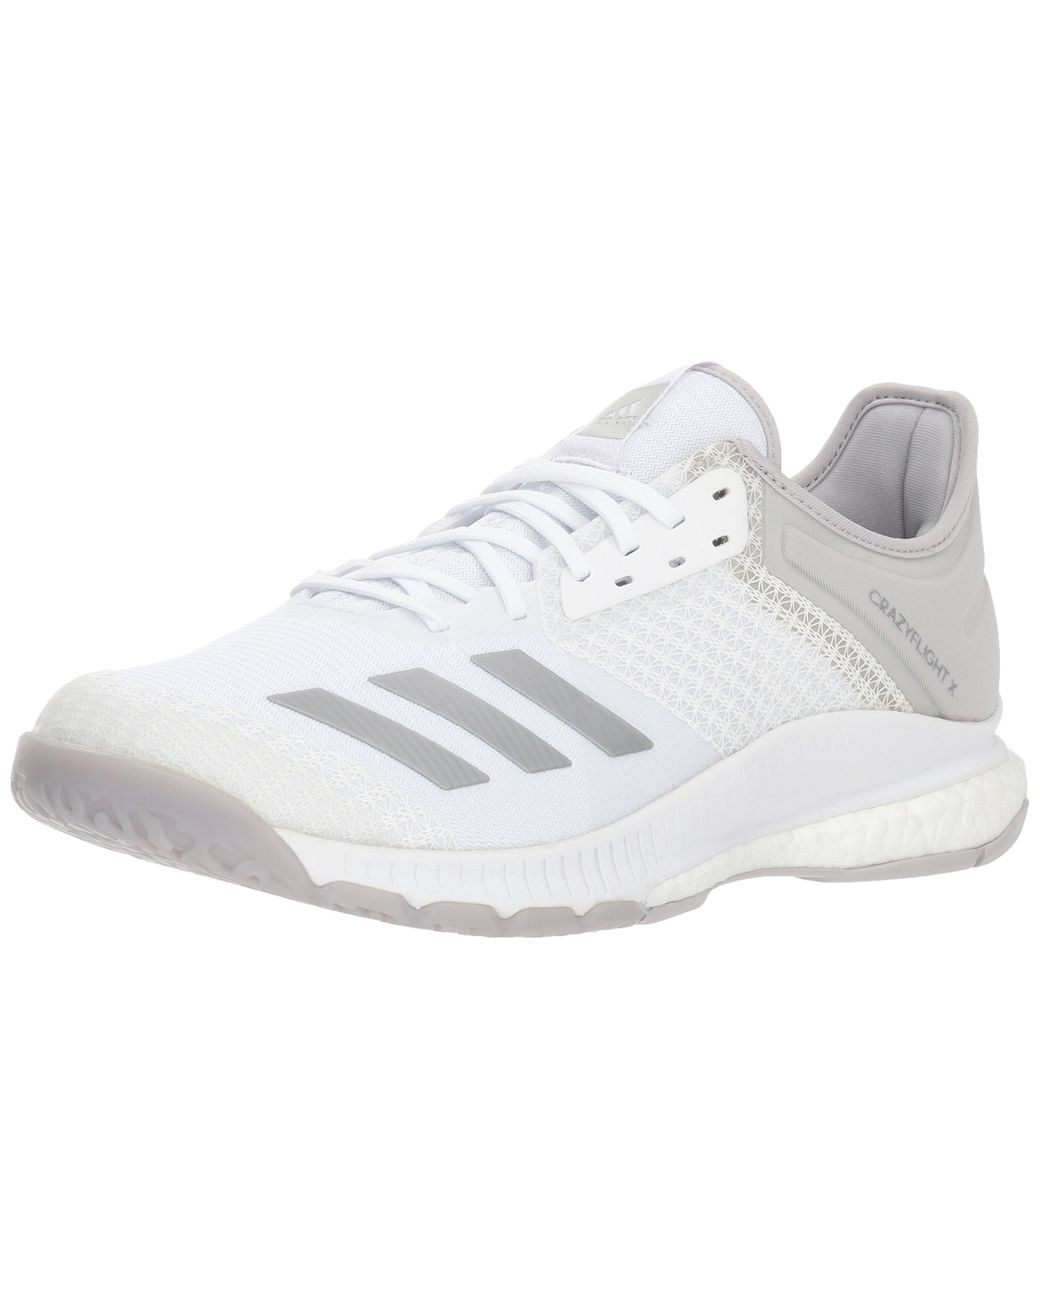 adidas Rubber Crazyflight X 2 Volleyball Shoe in White/Silver Metallic/Grey  (Gray) | Lyst